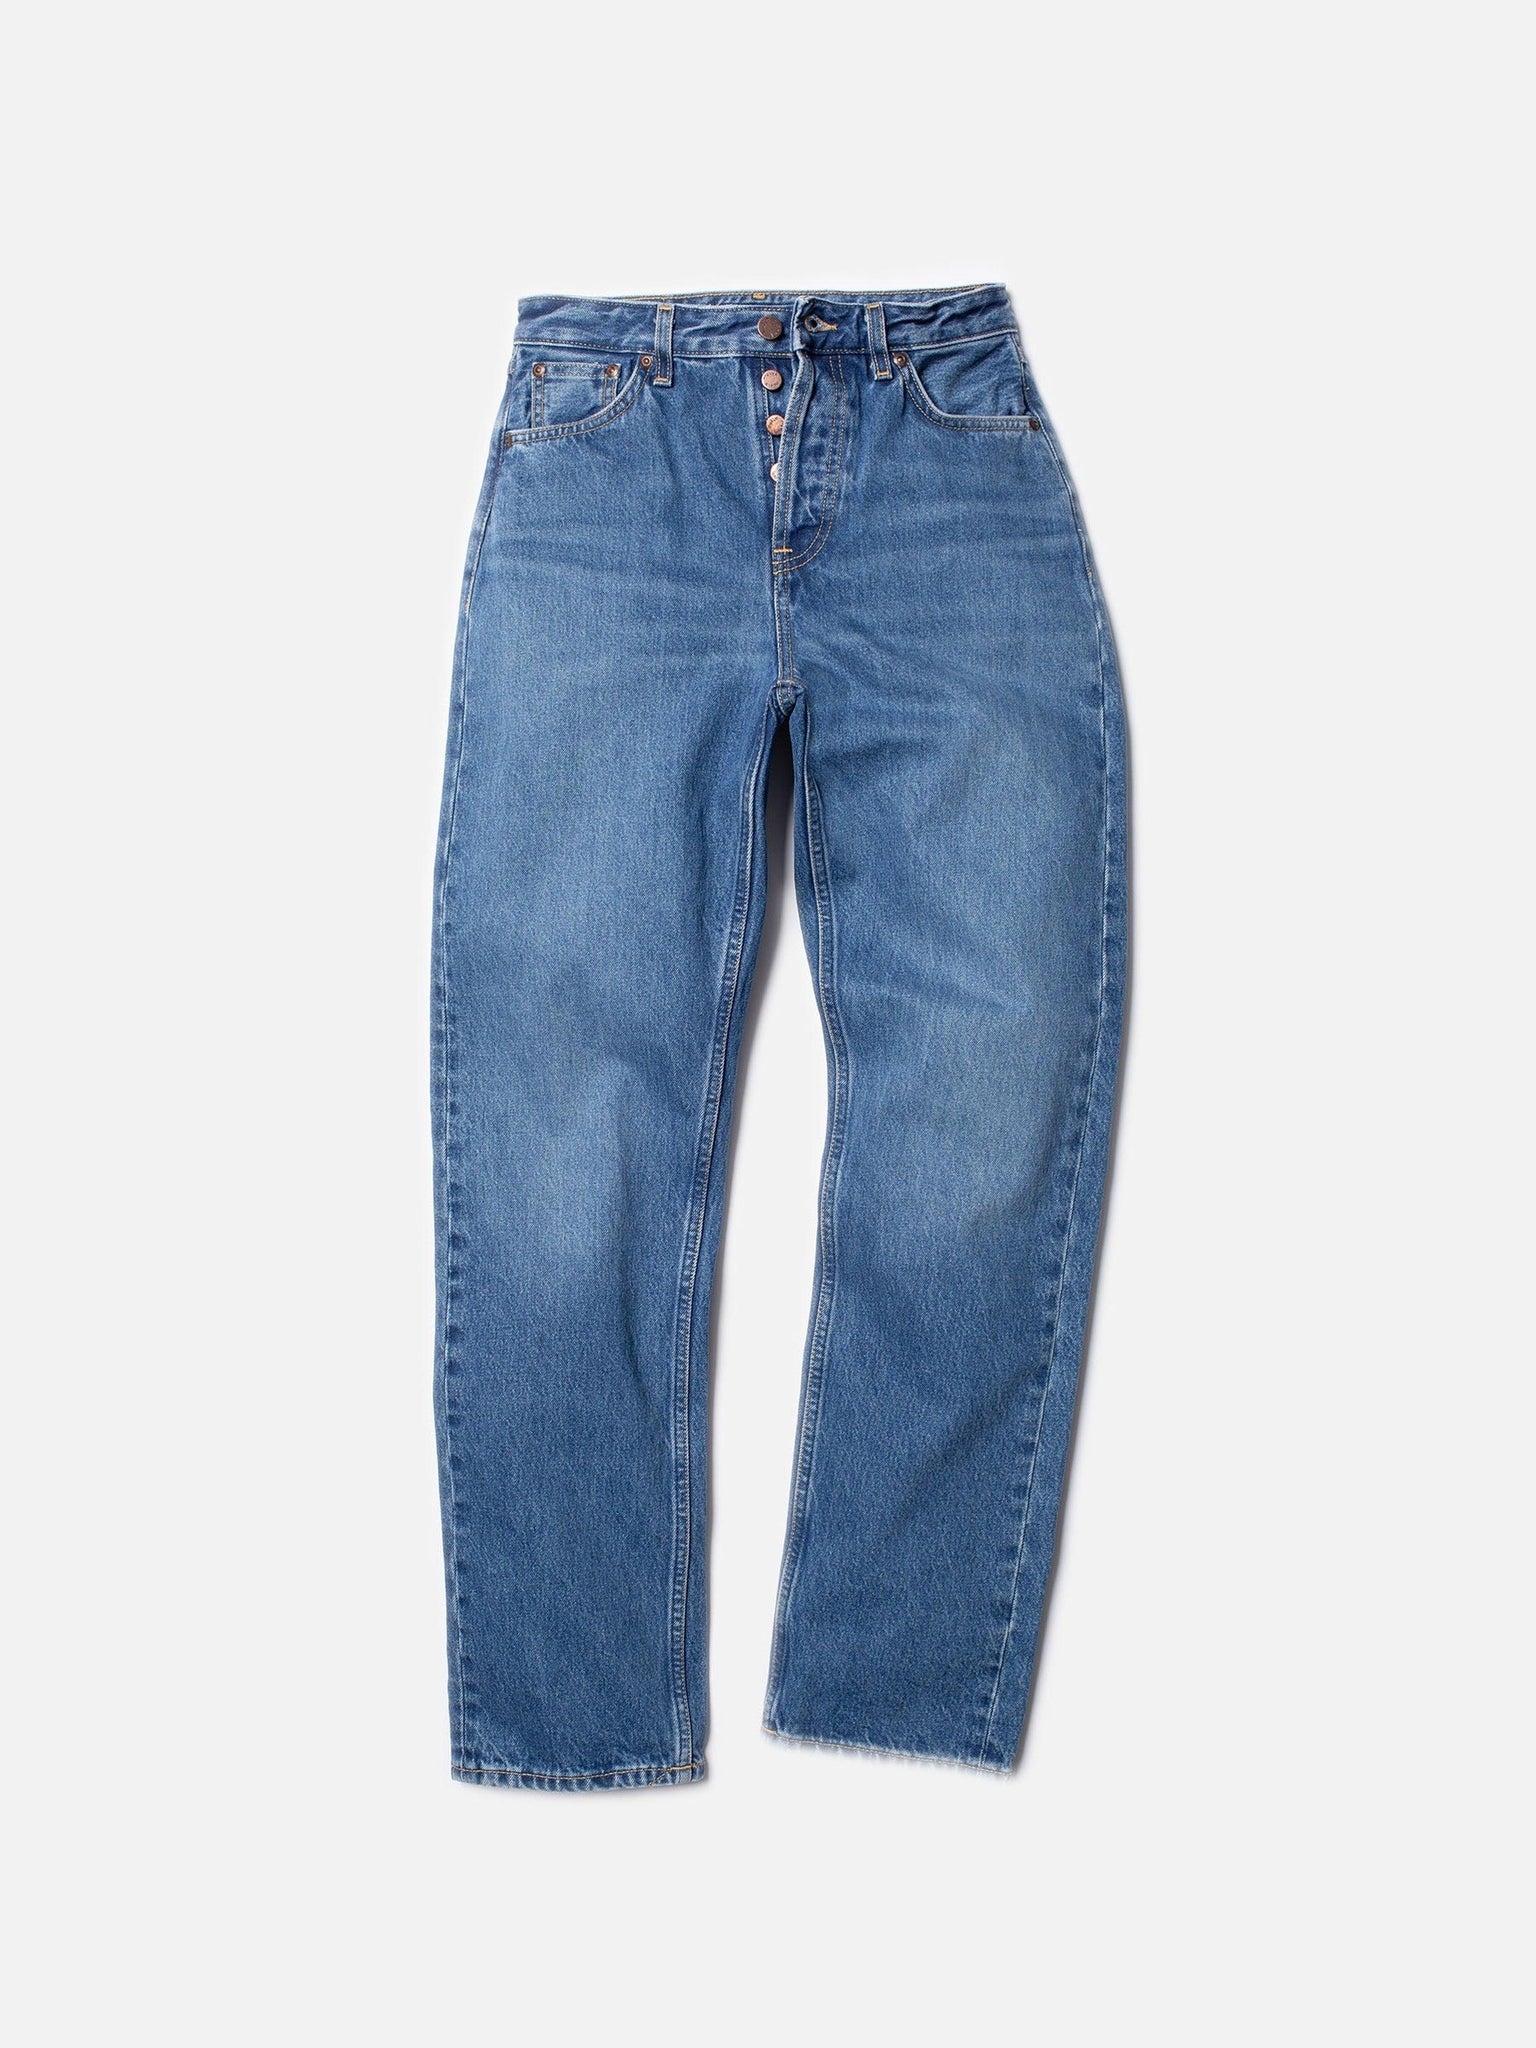 Lofty Lo Nostalgic Blue - INHABIT - Exclusive Stockist of Nudie Jeans